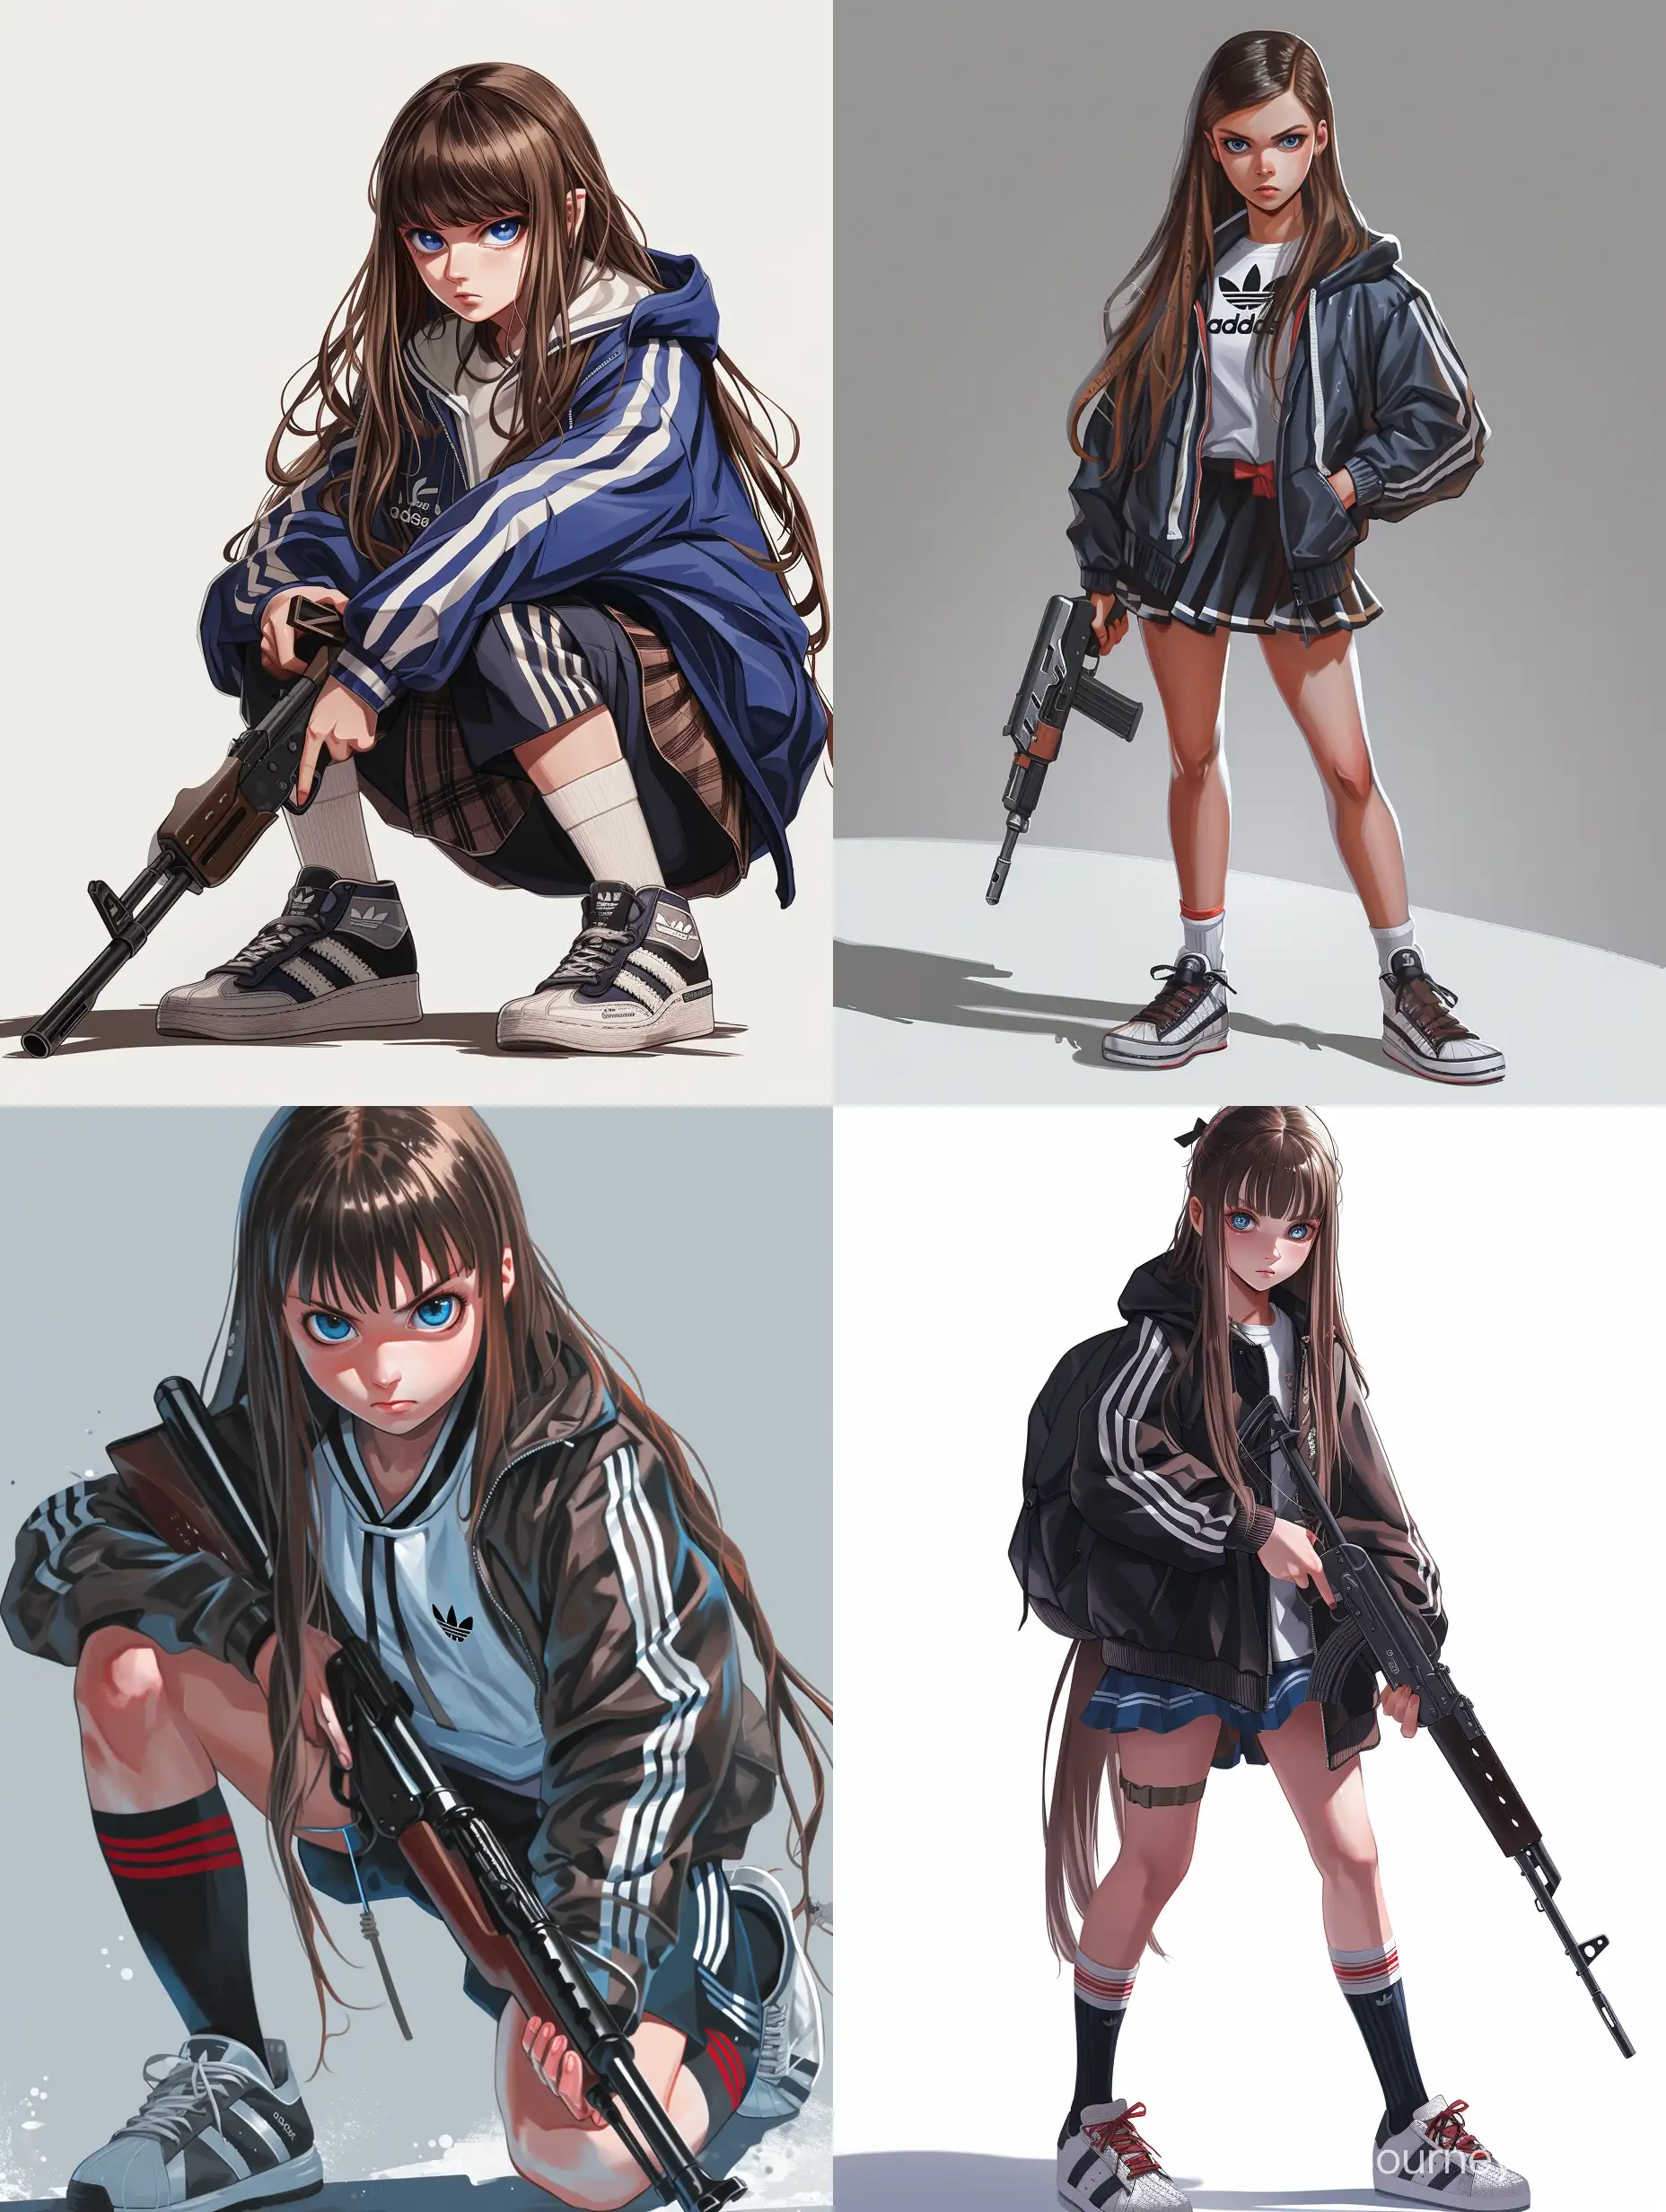 Russian-Schoolgirl-Teenager-in-Adidas-Windbreaker-and-Uniform-with-Weapon